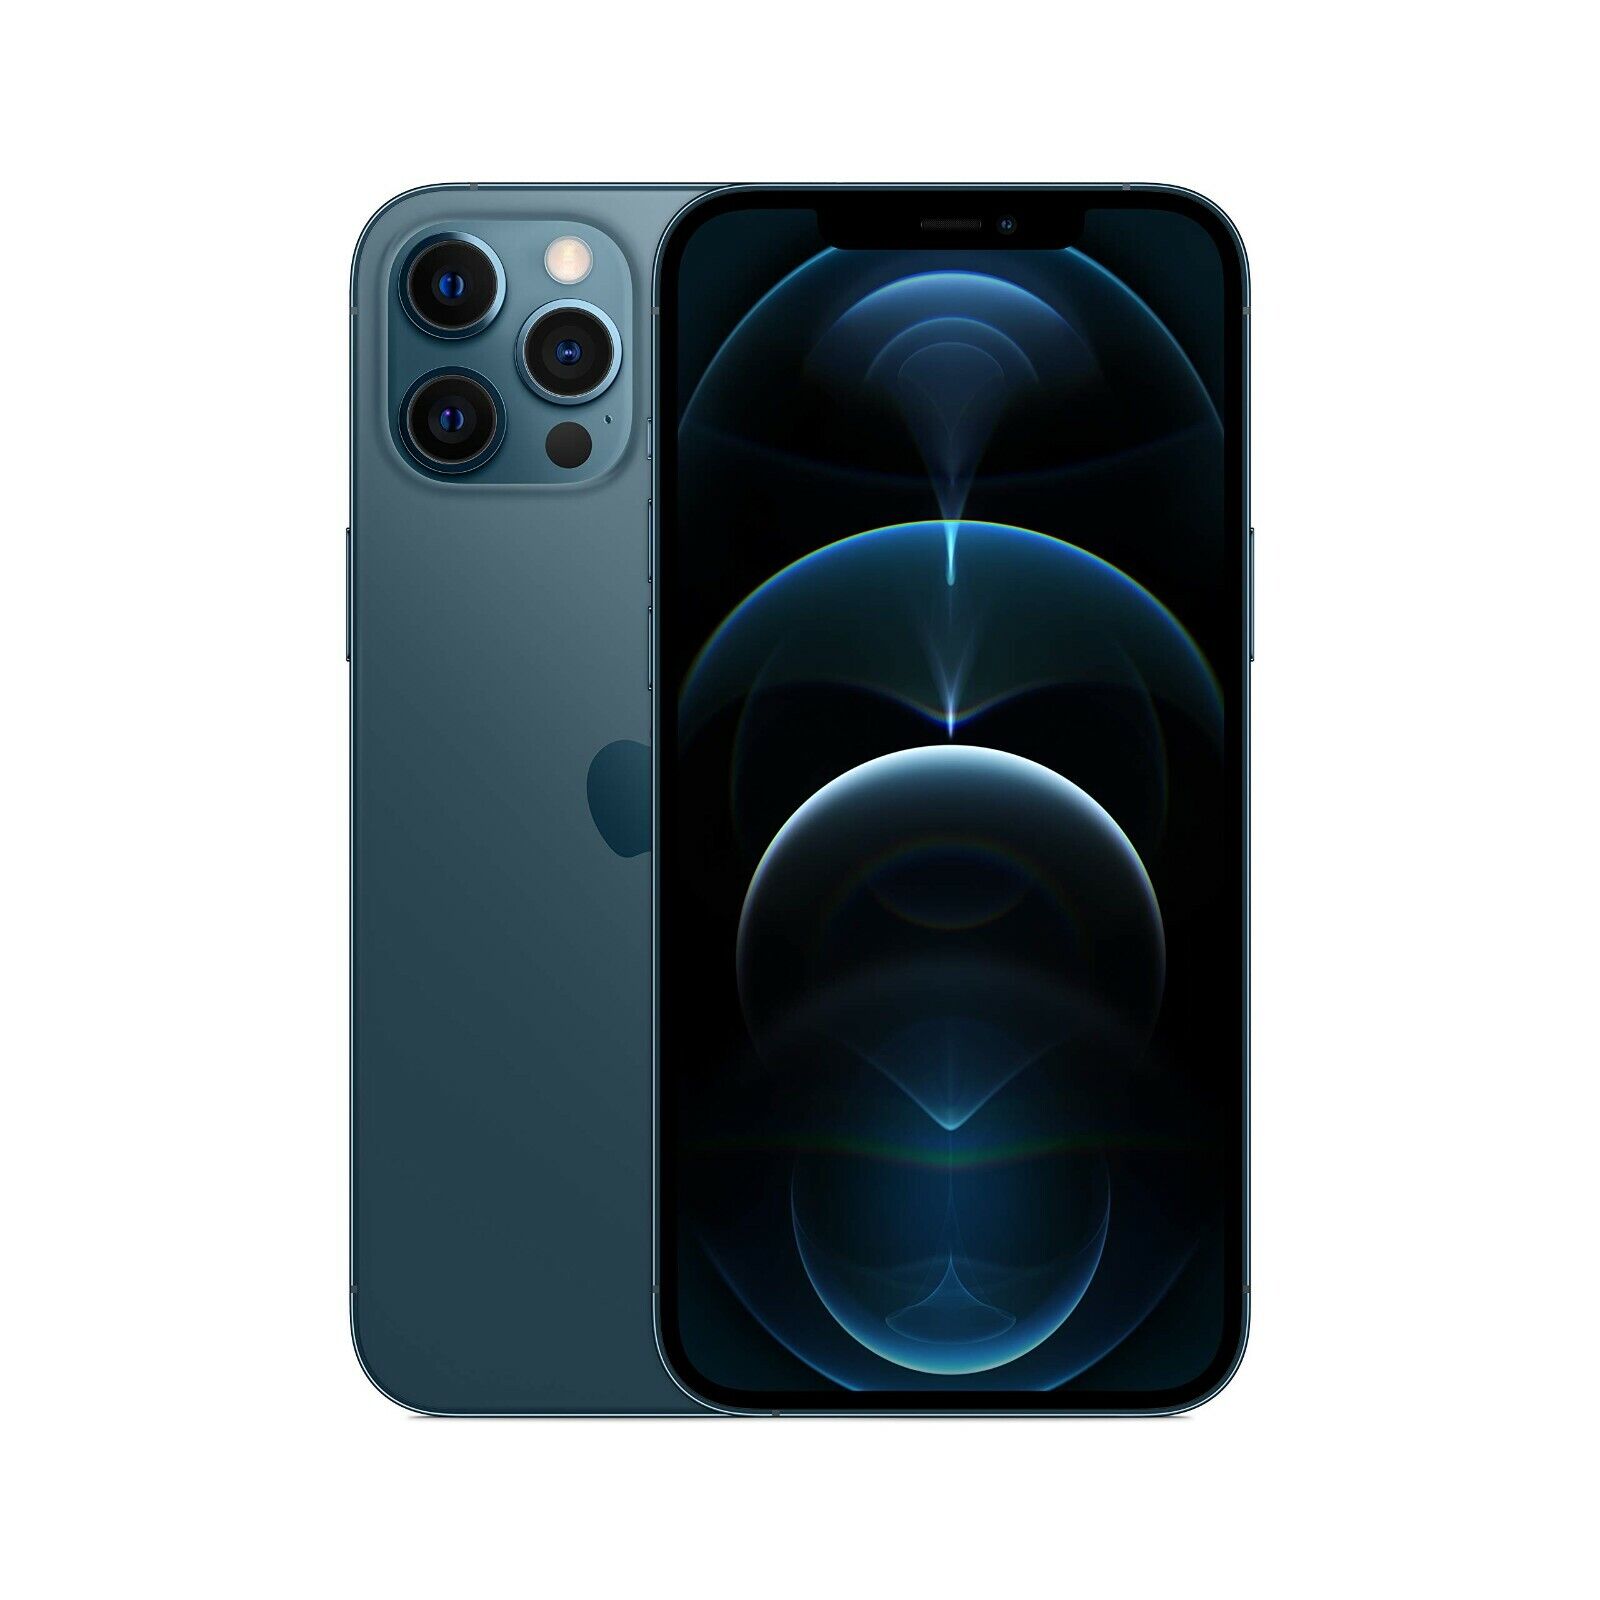 Apple iPhone 12 Pro Max - 128GB - Pacific Blue (Unlocked) Very Good